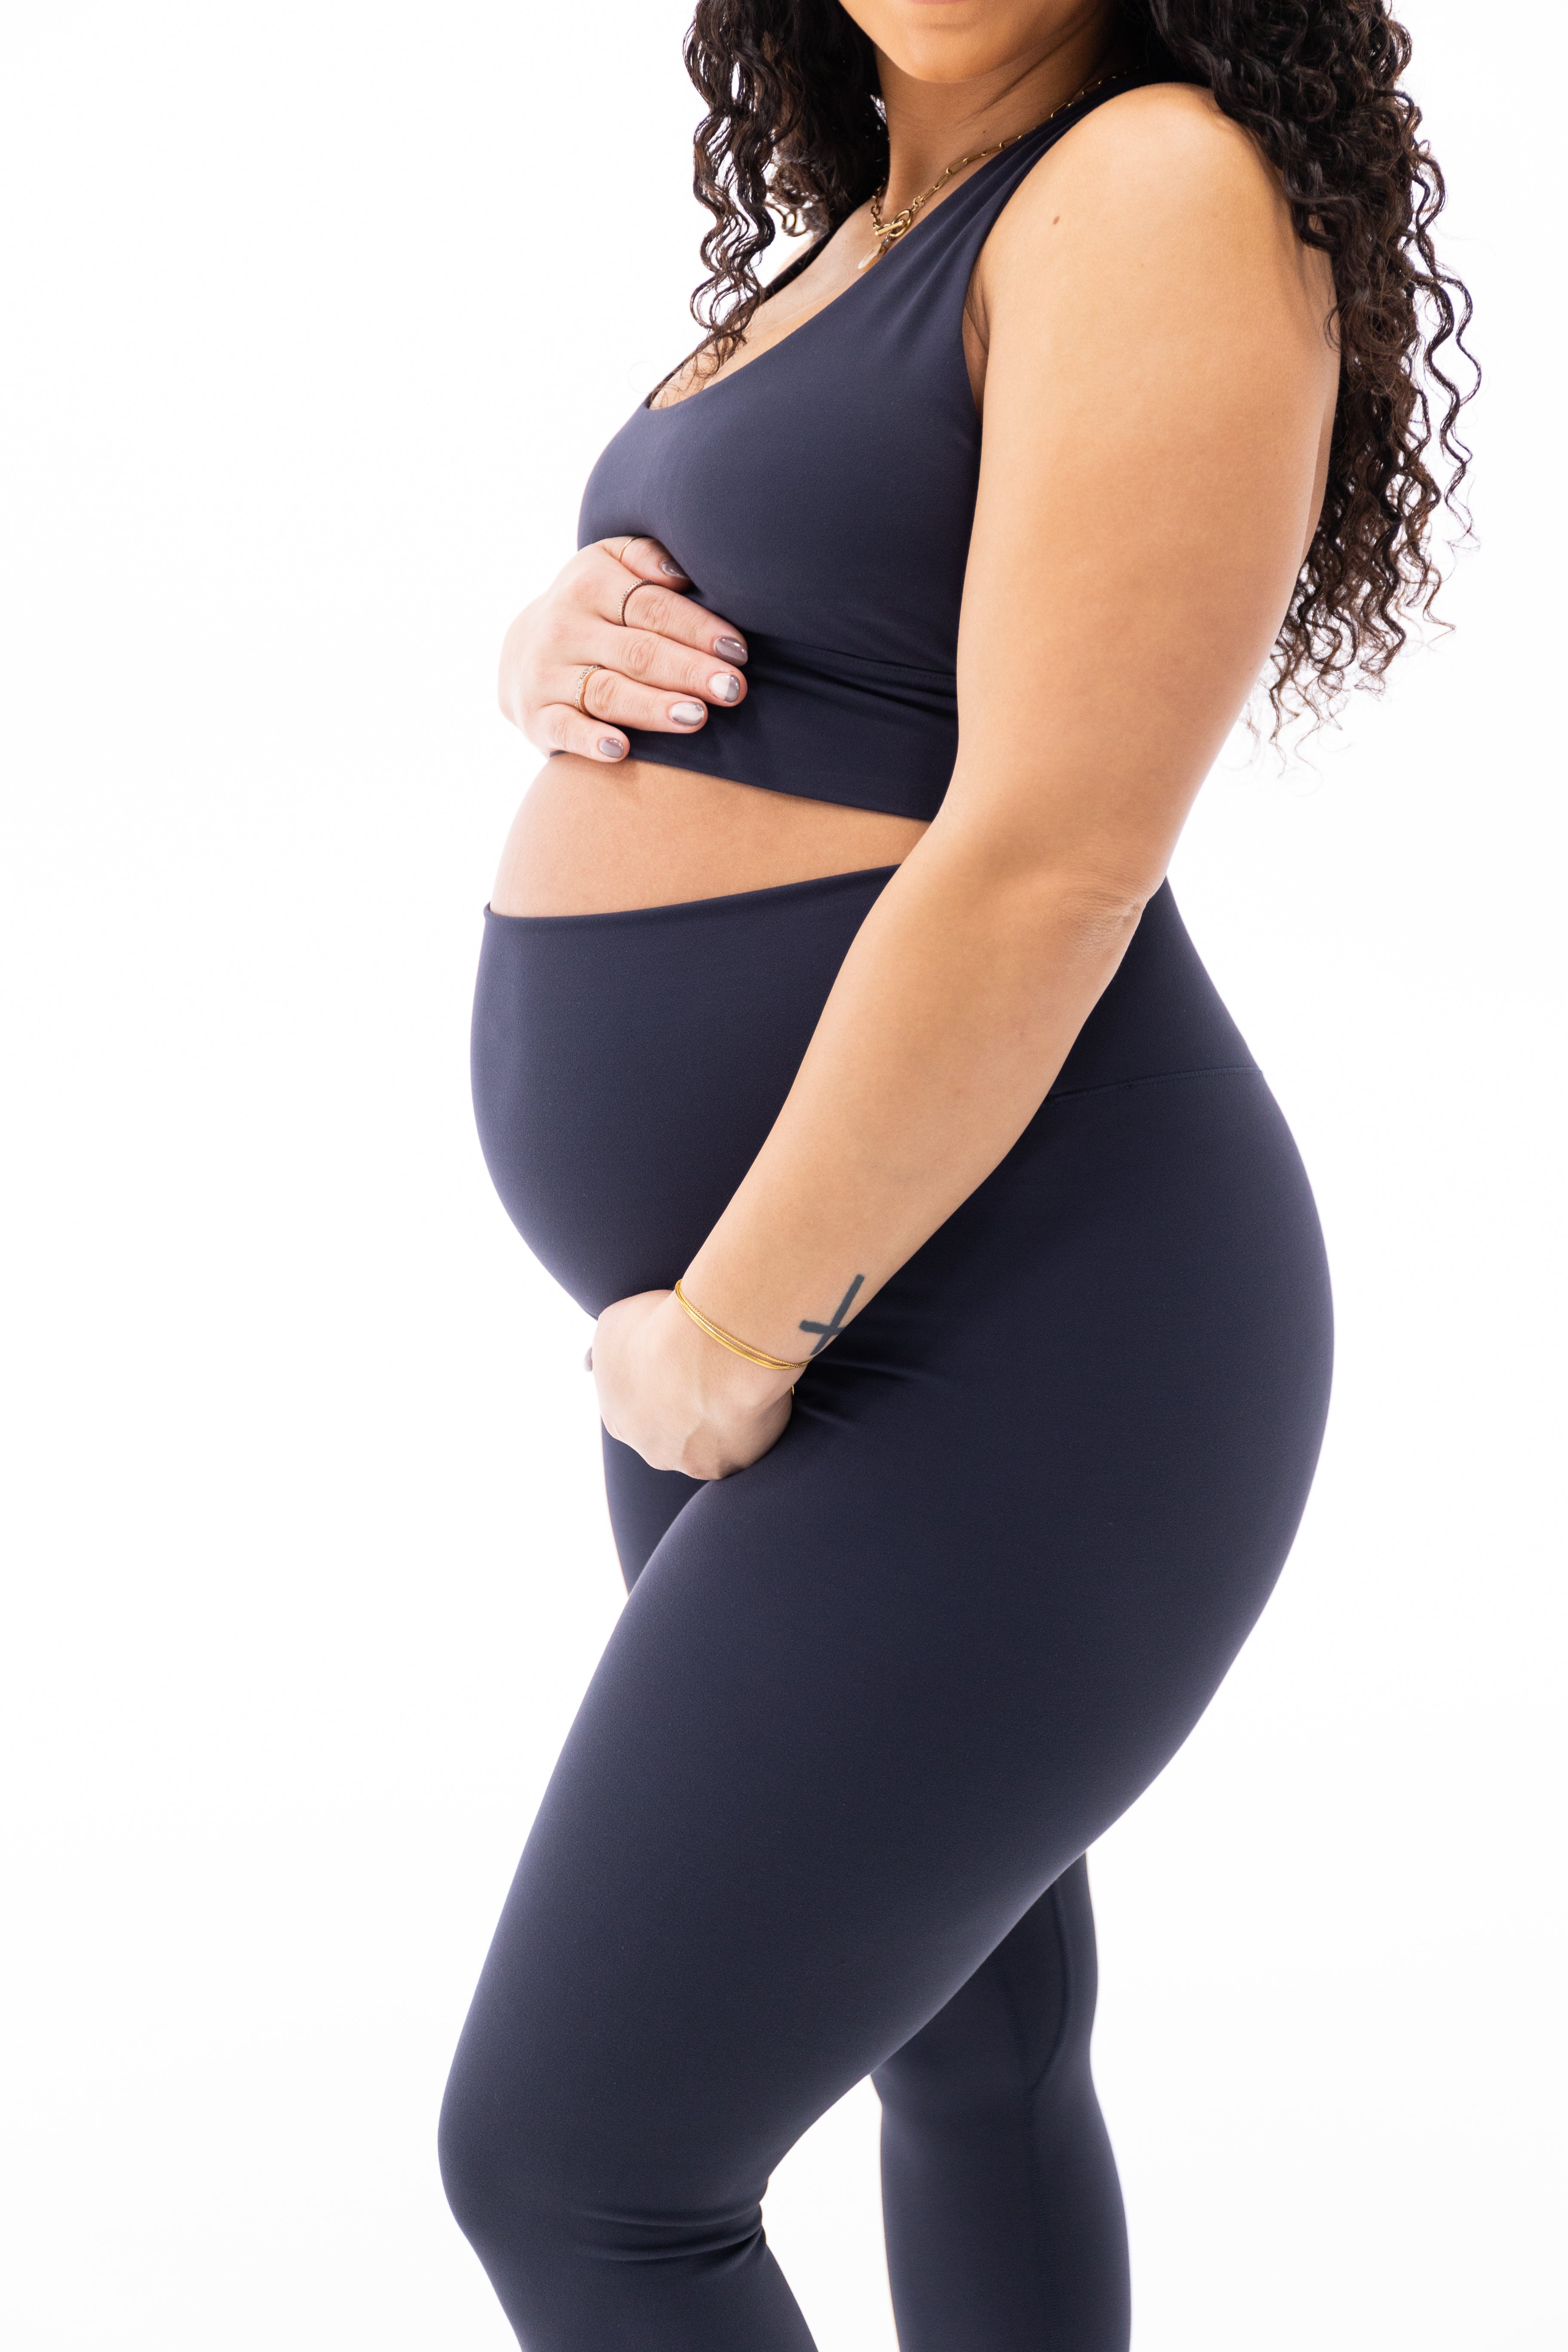 Maternity Bump Support Leggings for Pregnancy Women | The Putchi